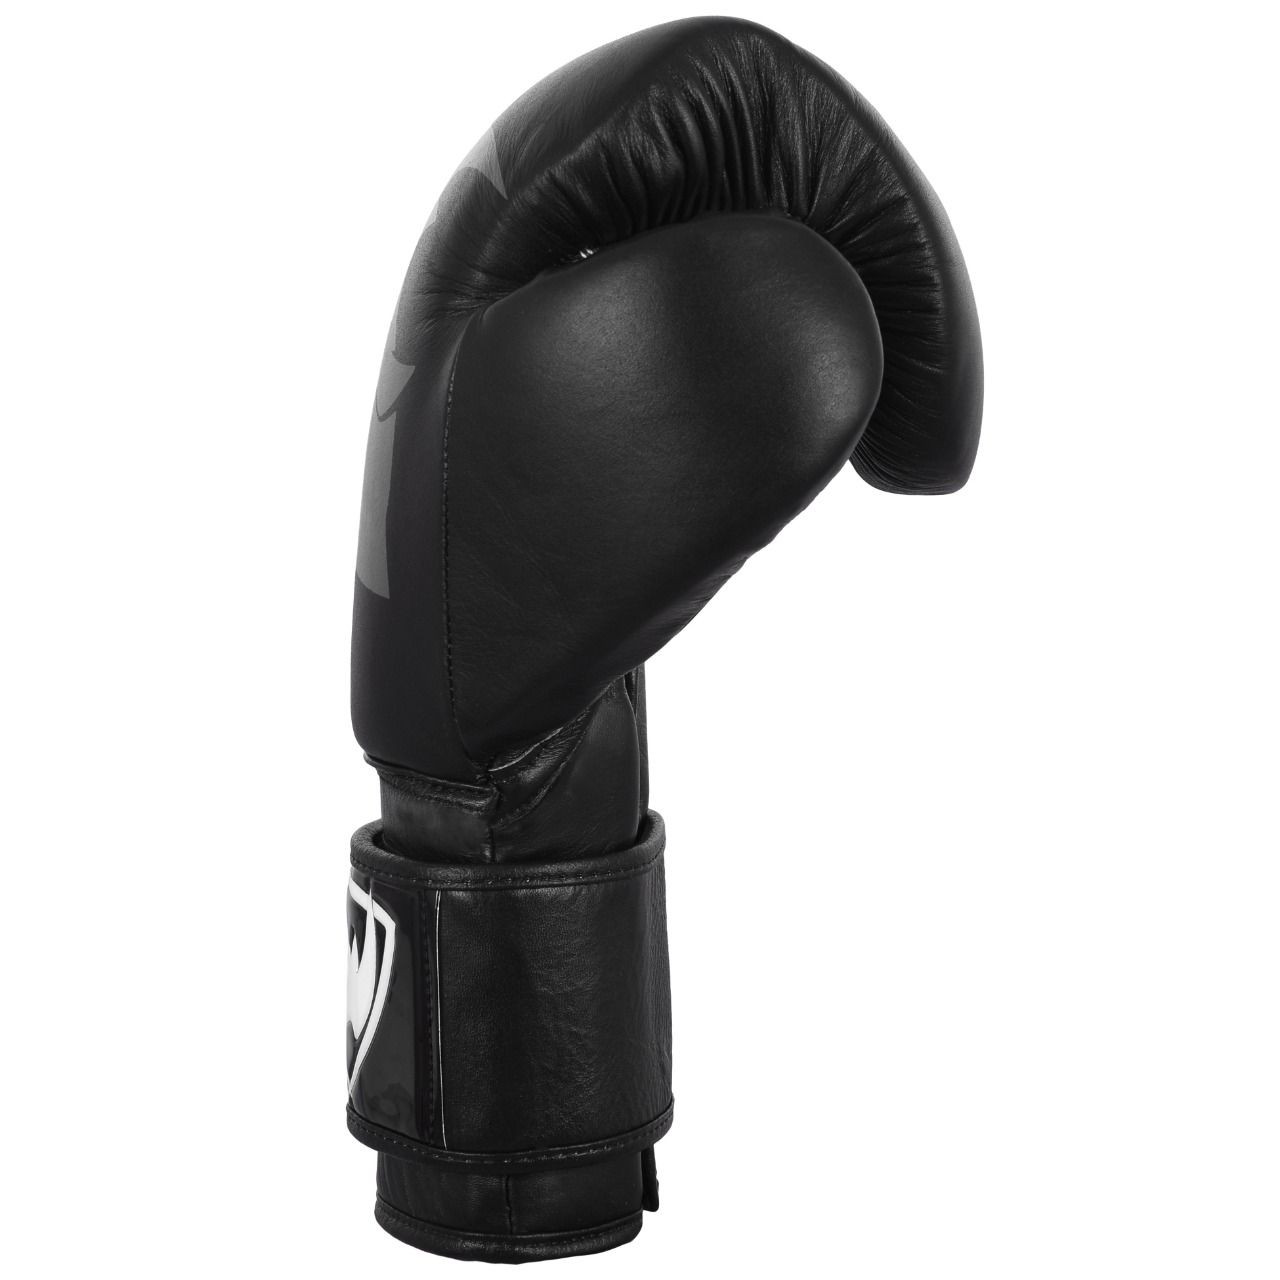 LX Boxing Gloves W/ Hook and Loop Closure Black